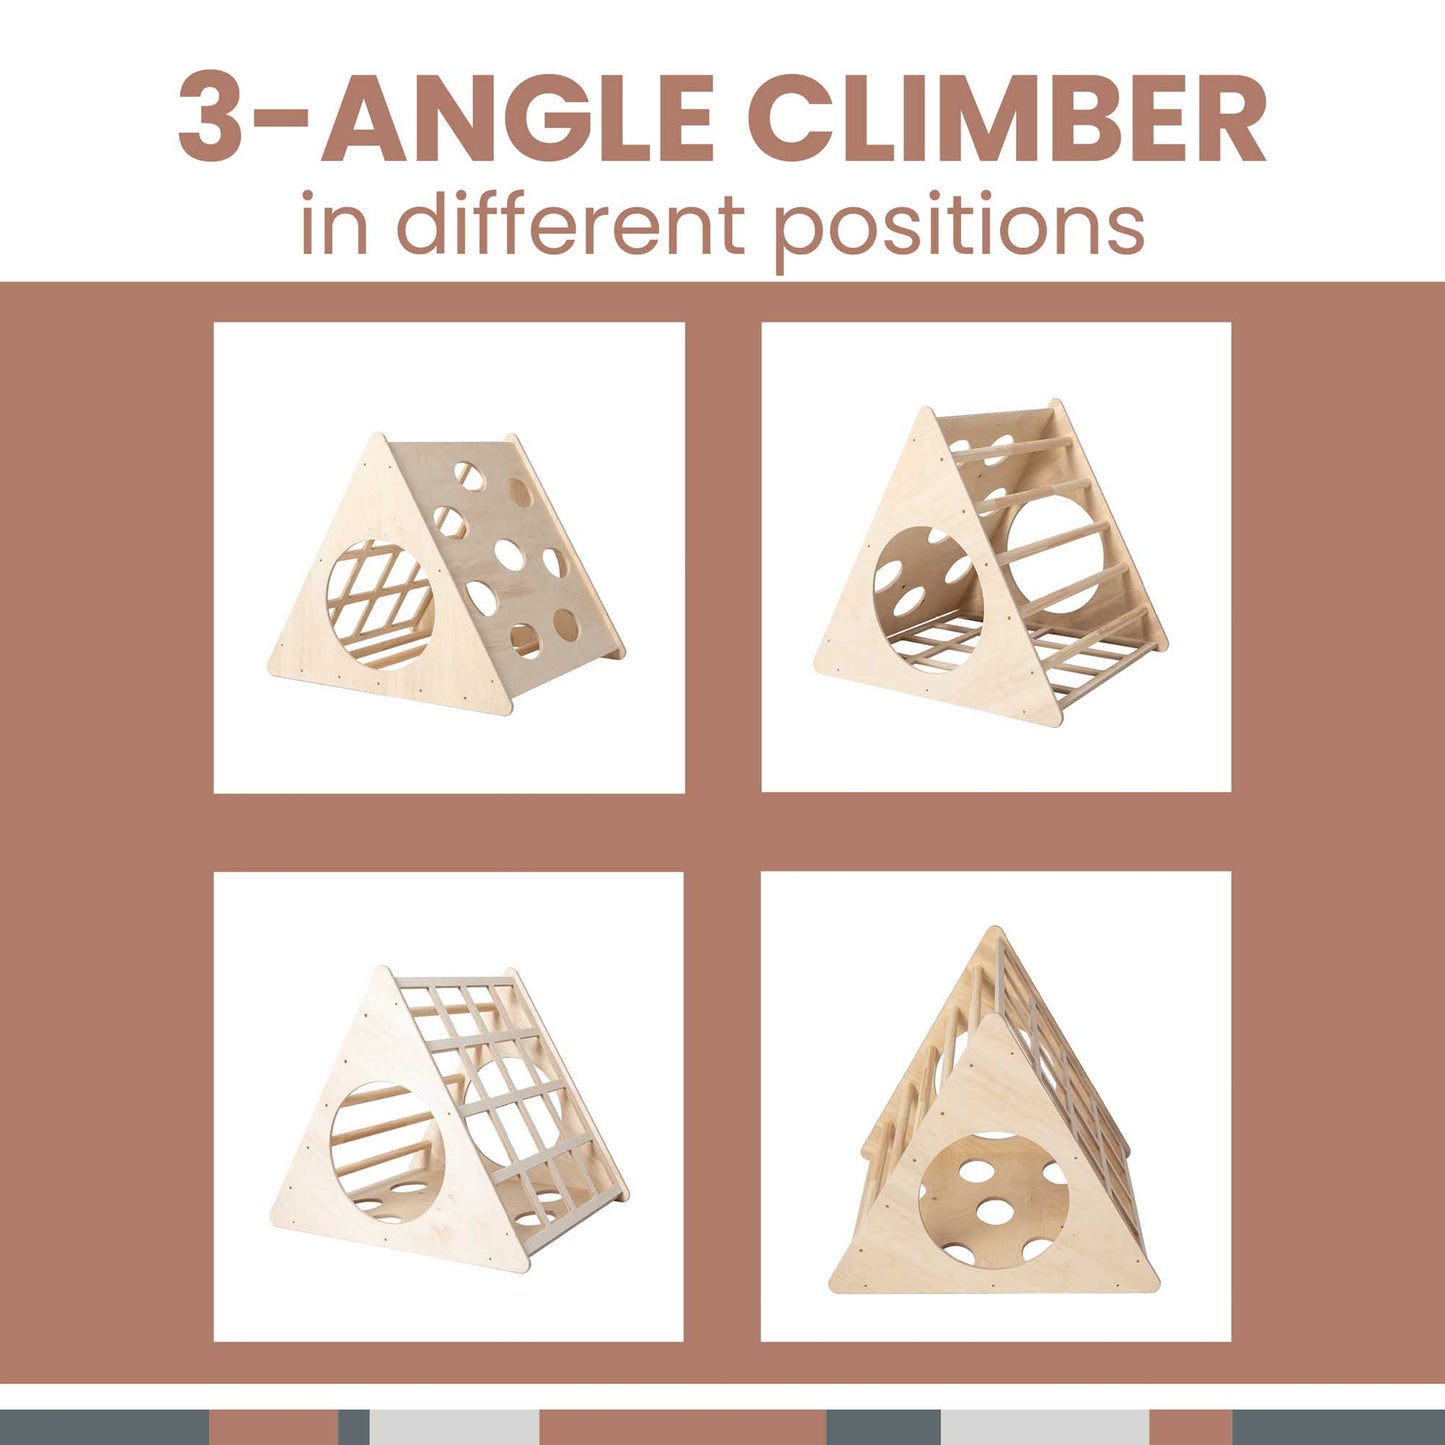 Climbing triangle + Transformable climbing gym + a ramp